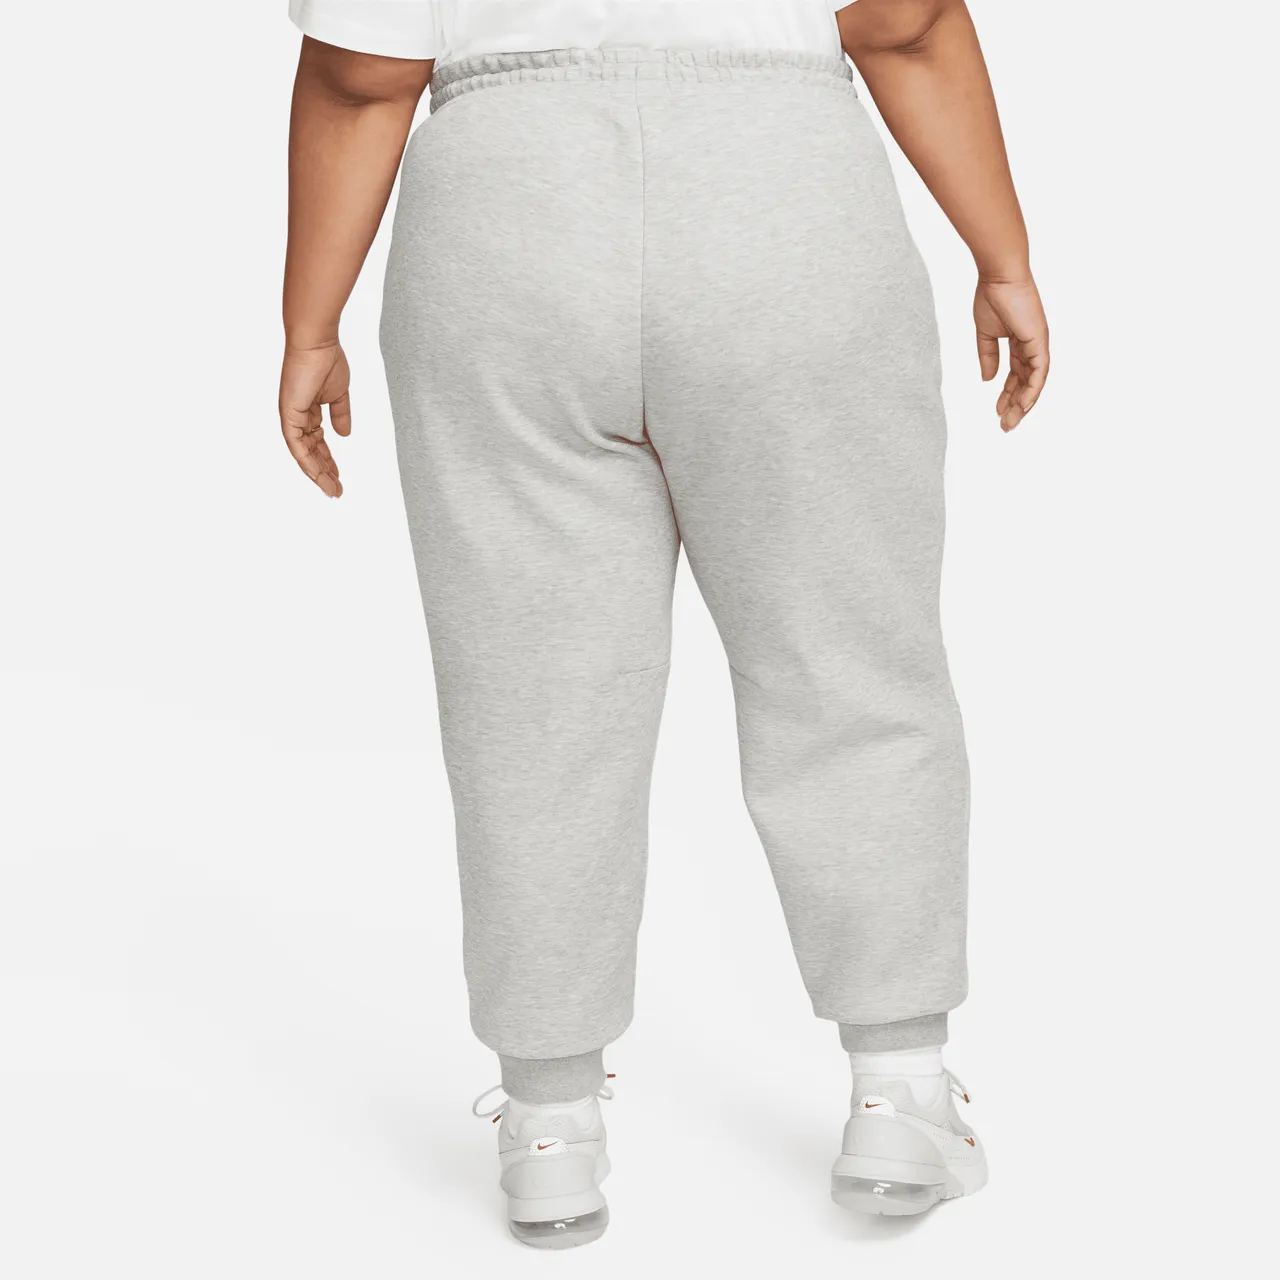 Nike Sportswear Tech Fleece joggingbroek met halfhoge taille voor dames (Plus Size) - Grijs